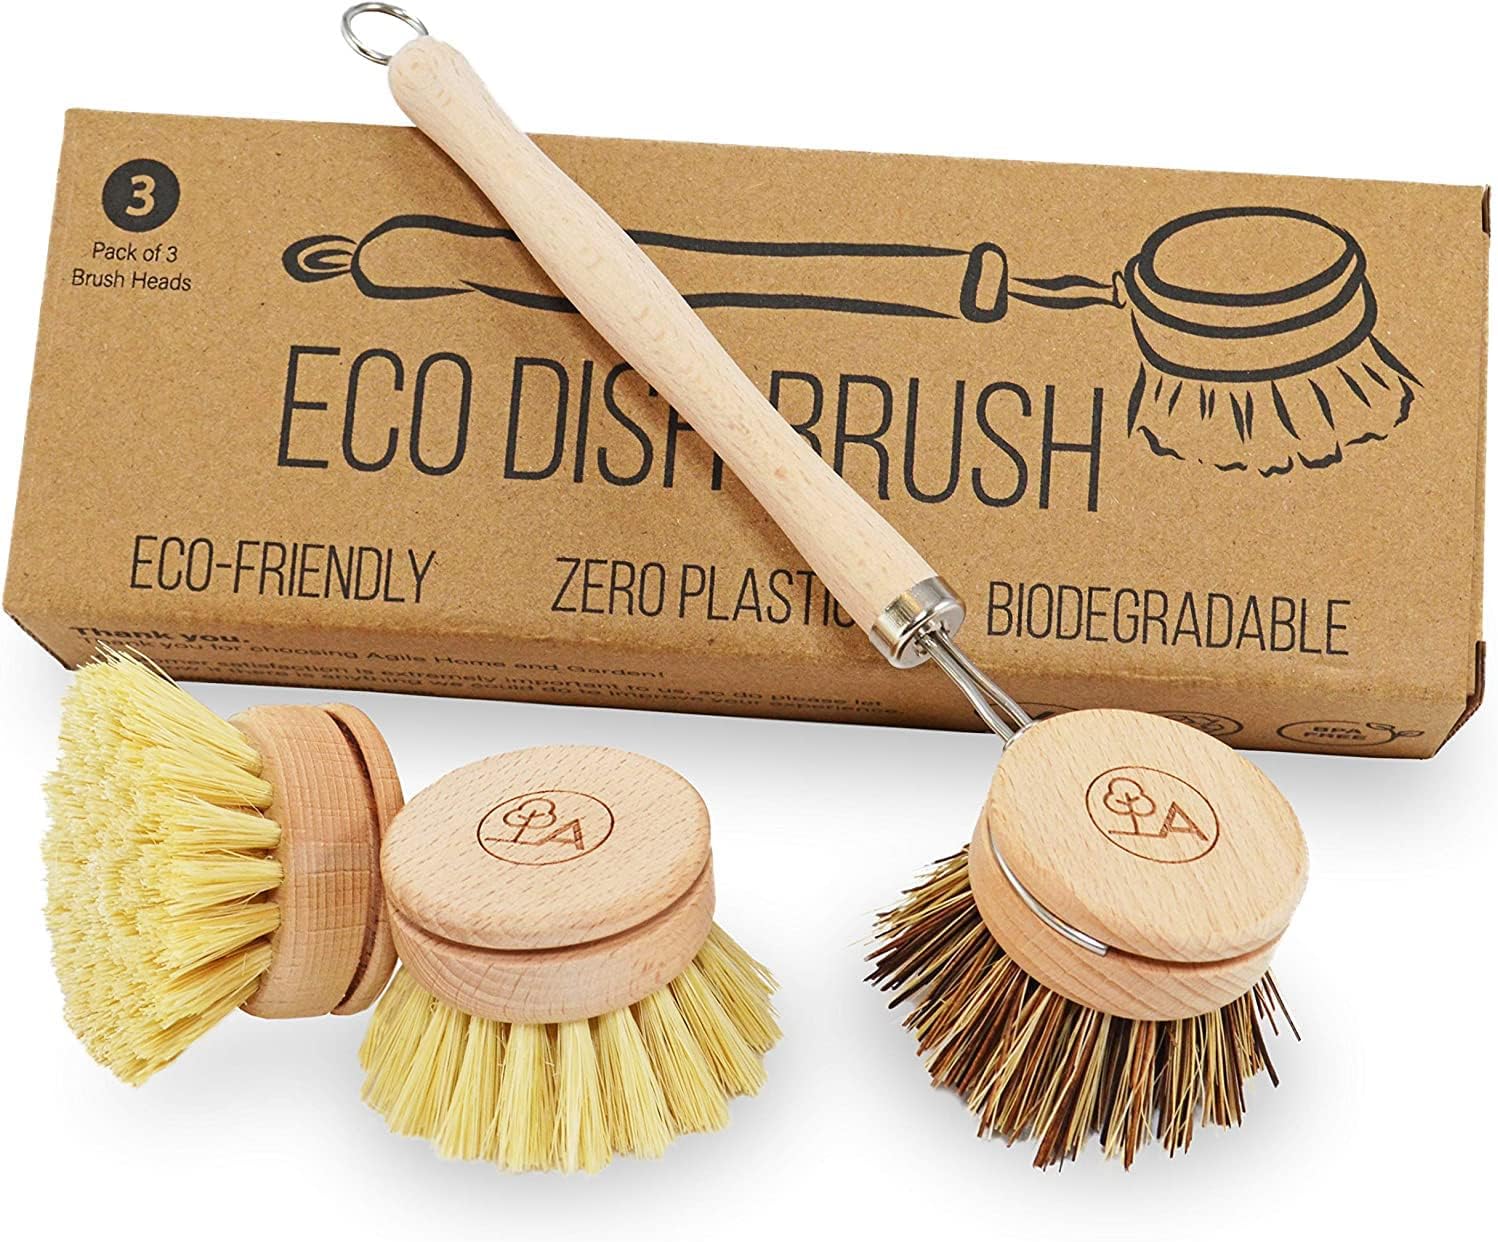 Wooden Dish Brush & Eco Sponge Set Review